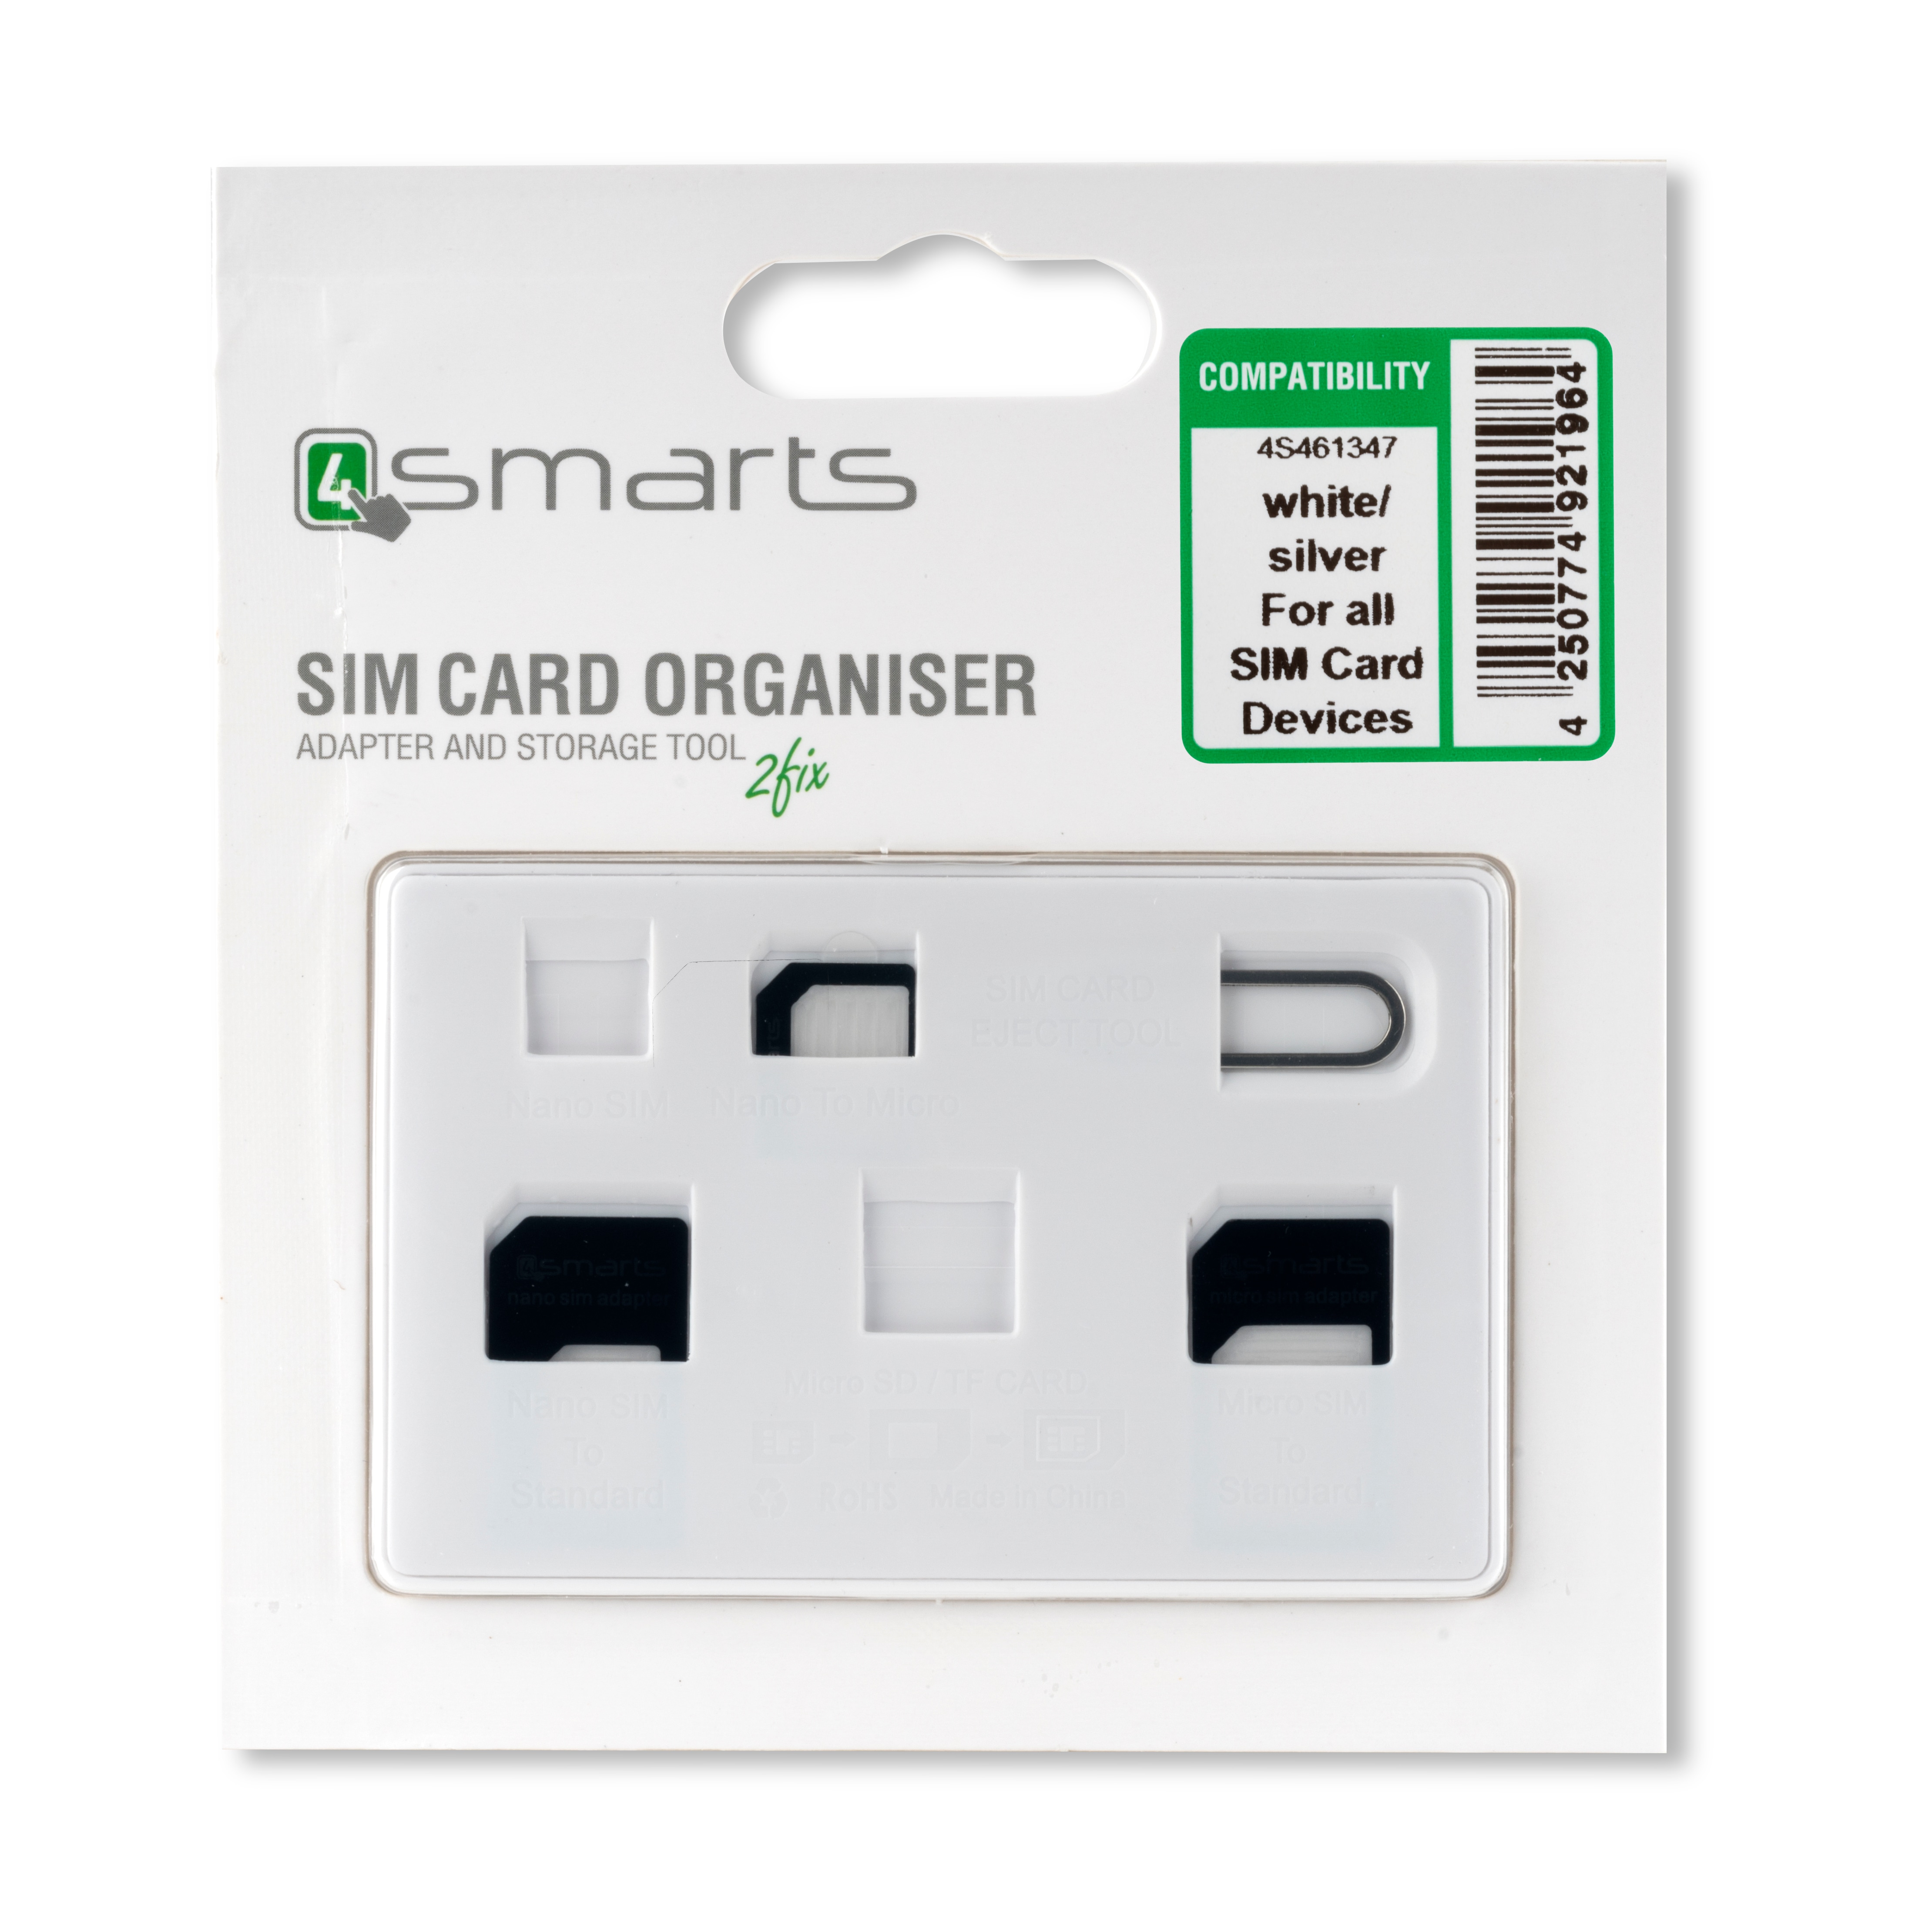 4smarts SIM Card Organiser